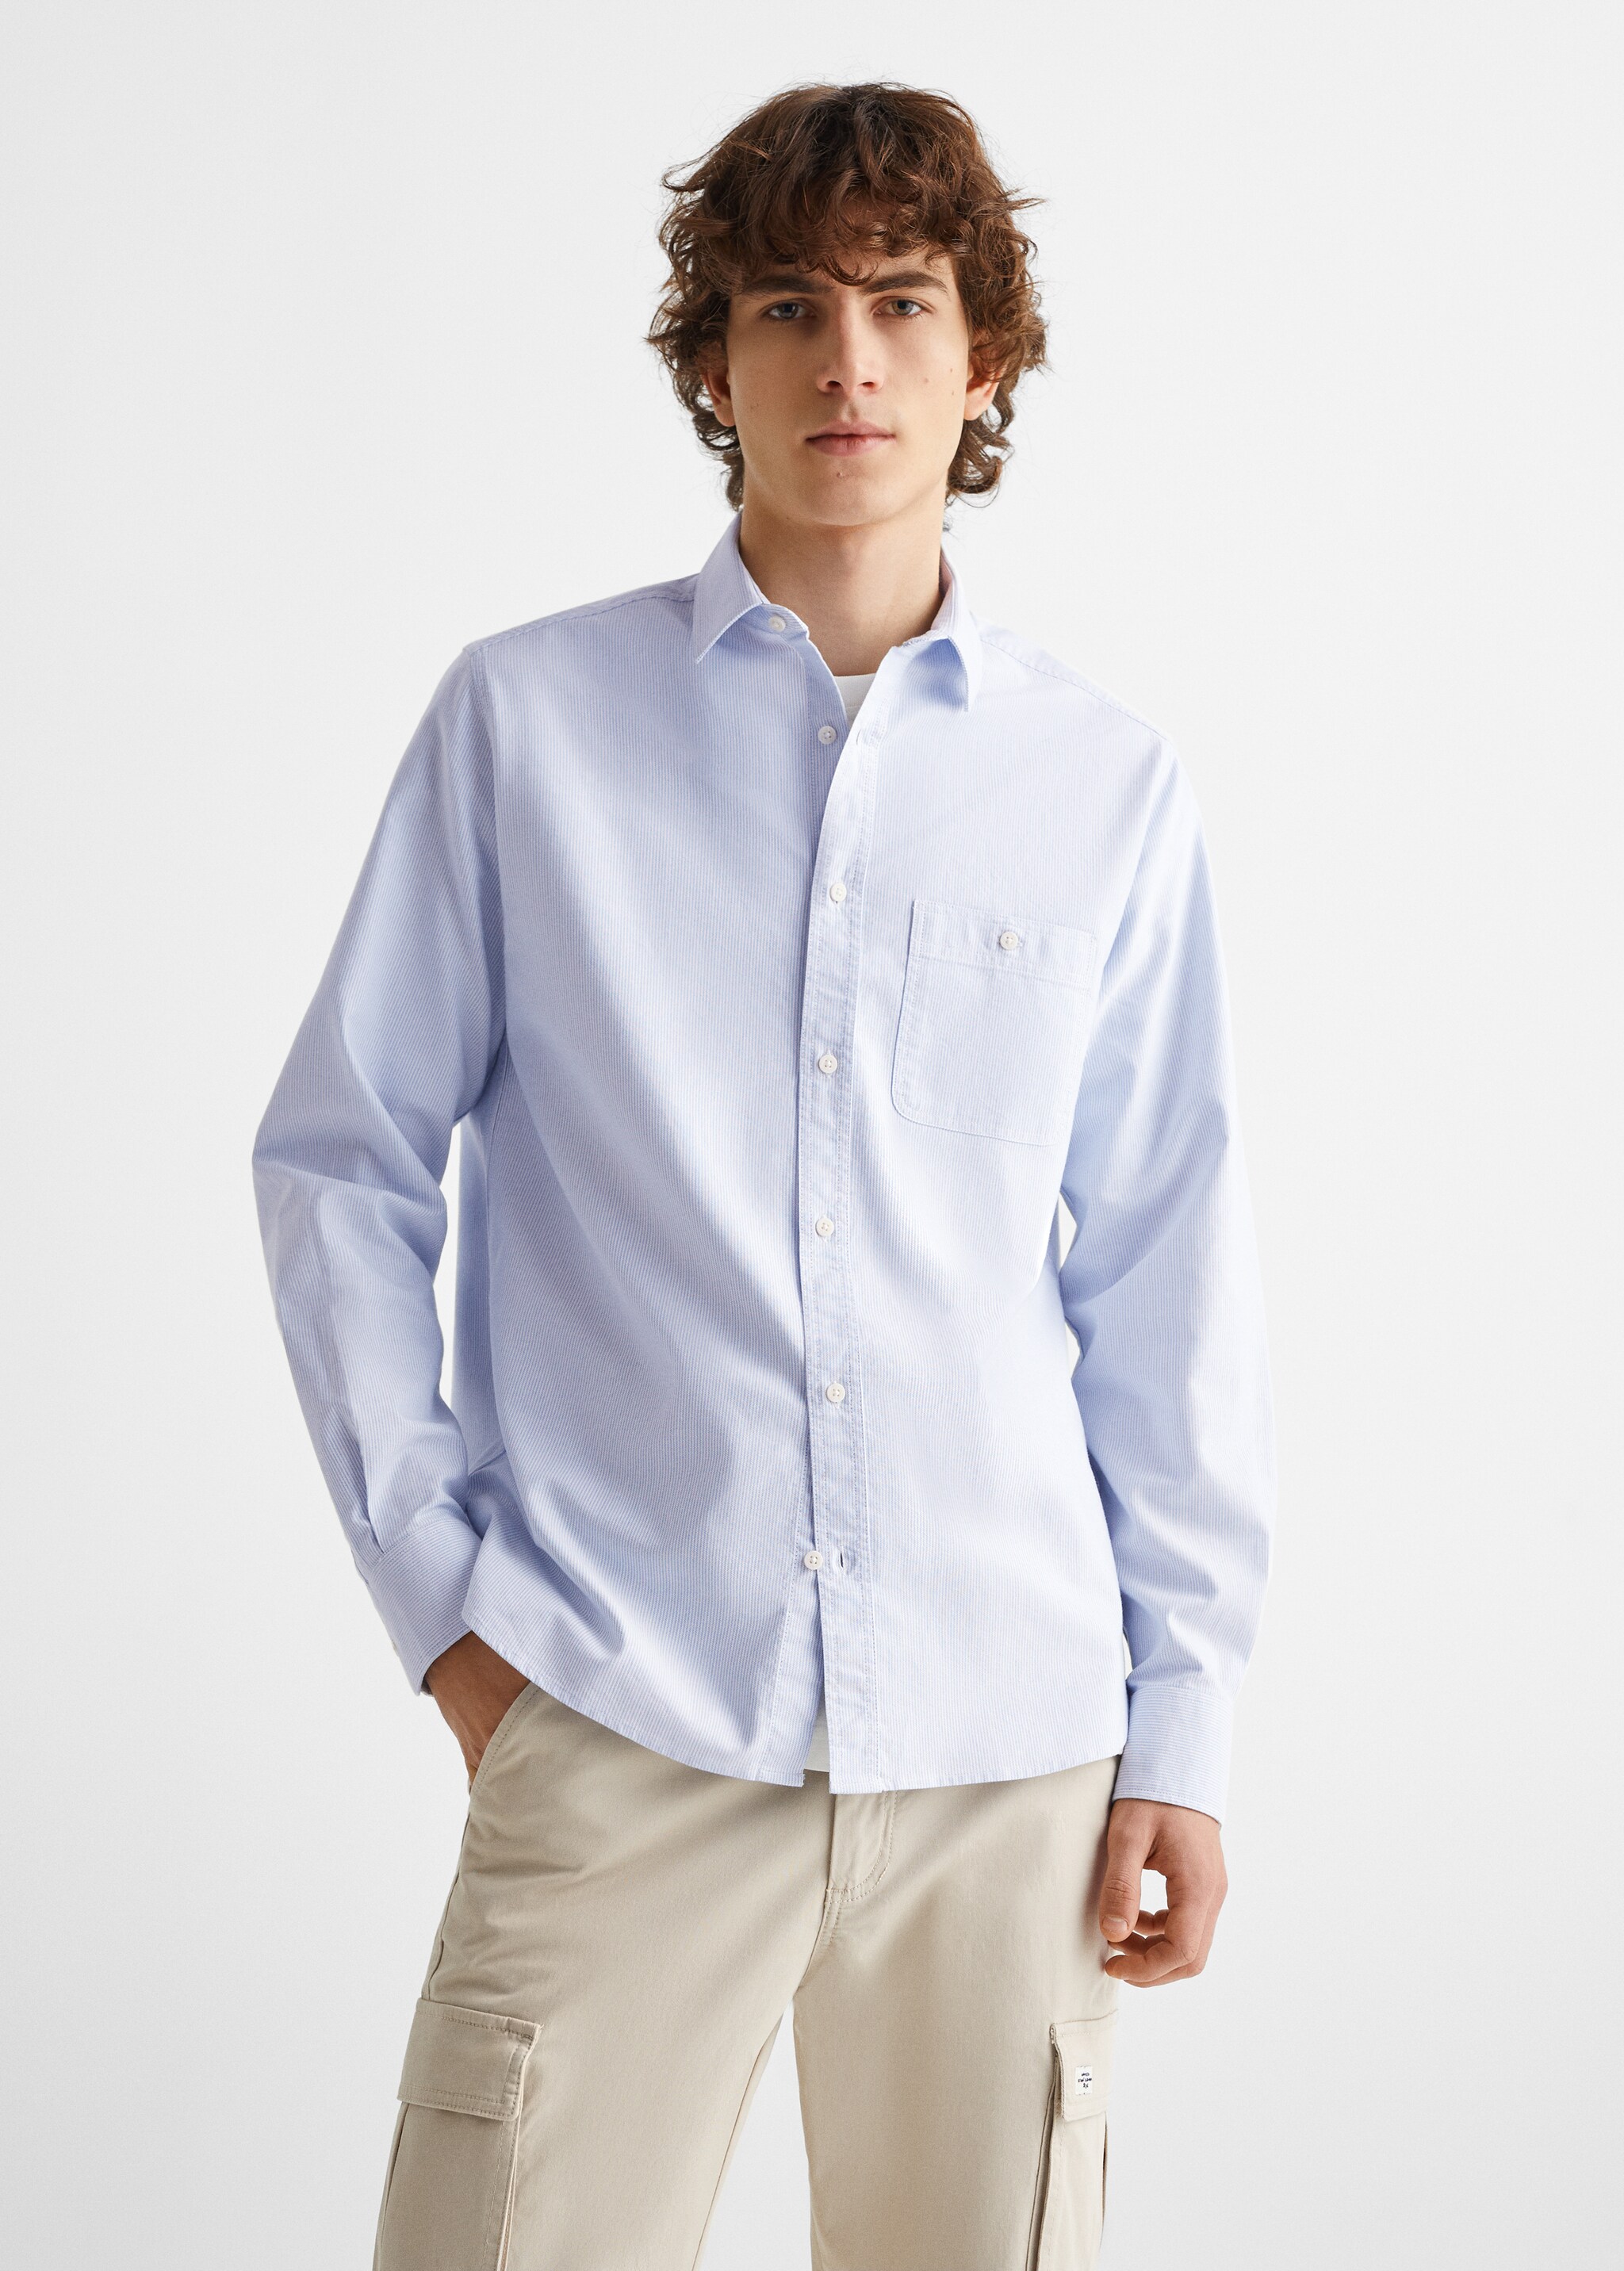 Oxford cotton shirt - Medium plane